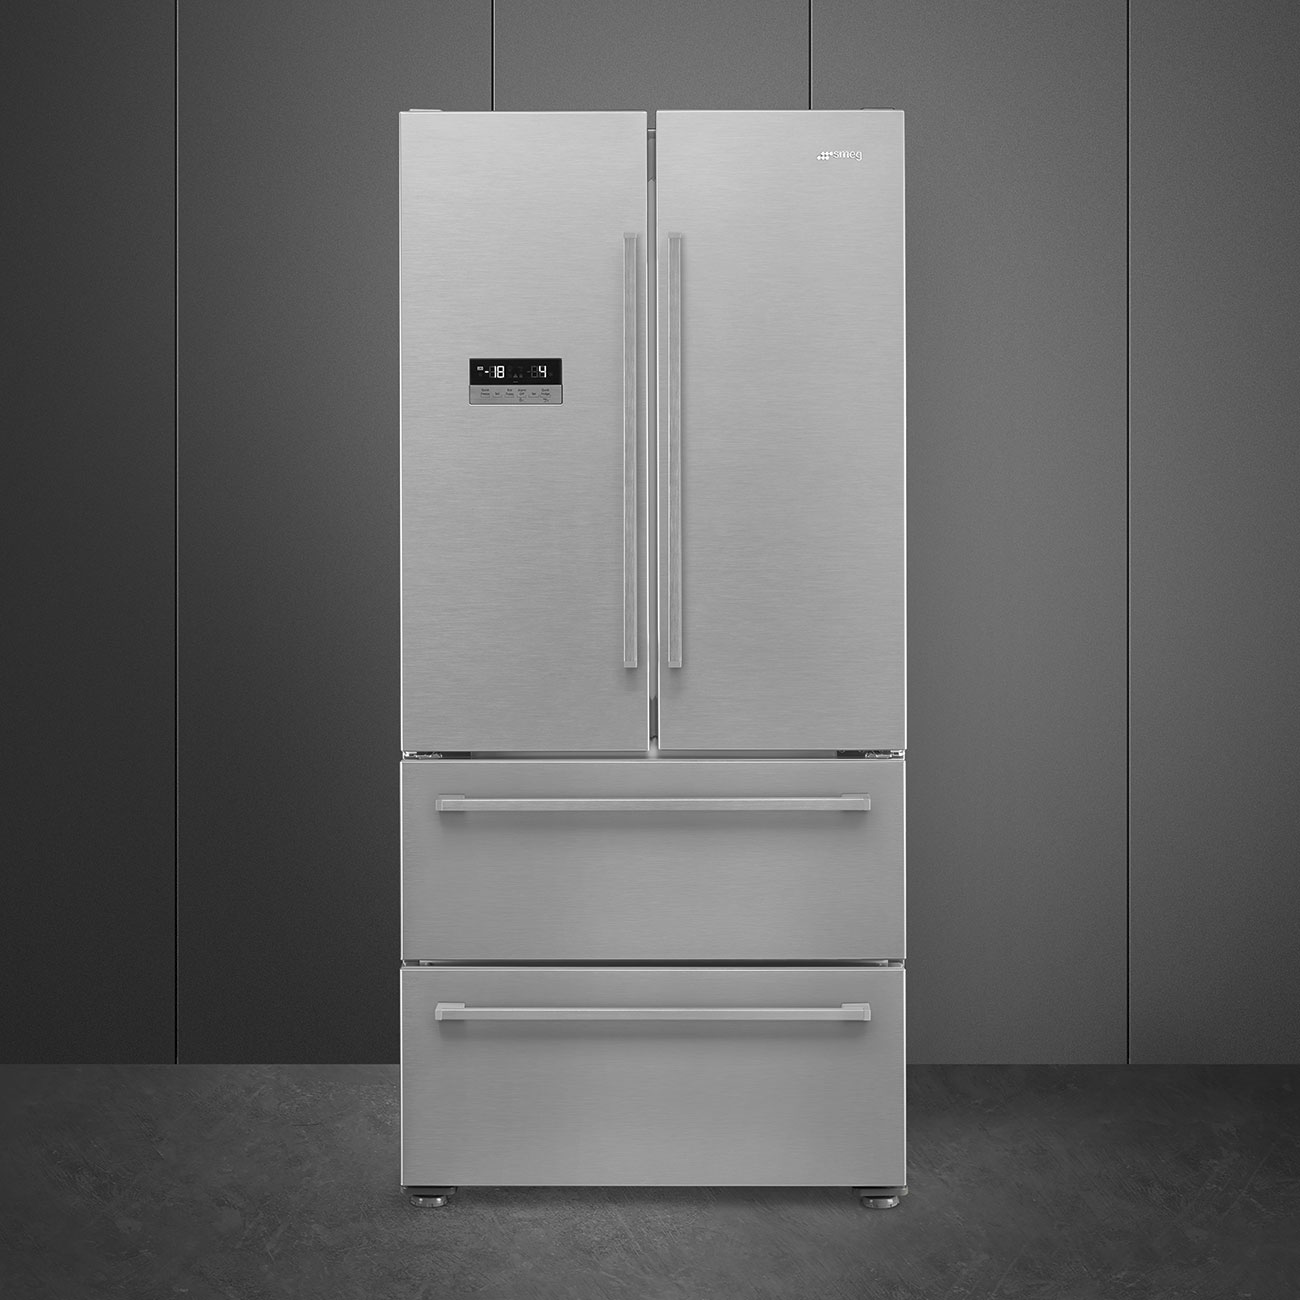 2 Doors & 2 Drawers Free standing refrigerator - Smeg_2